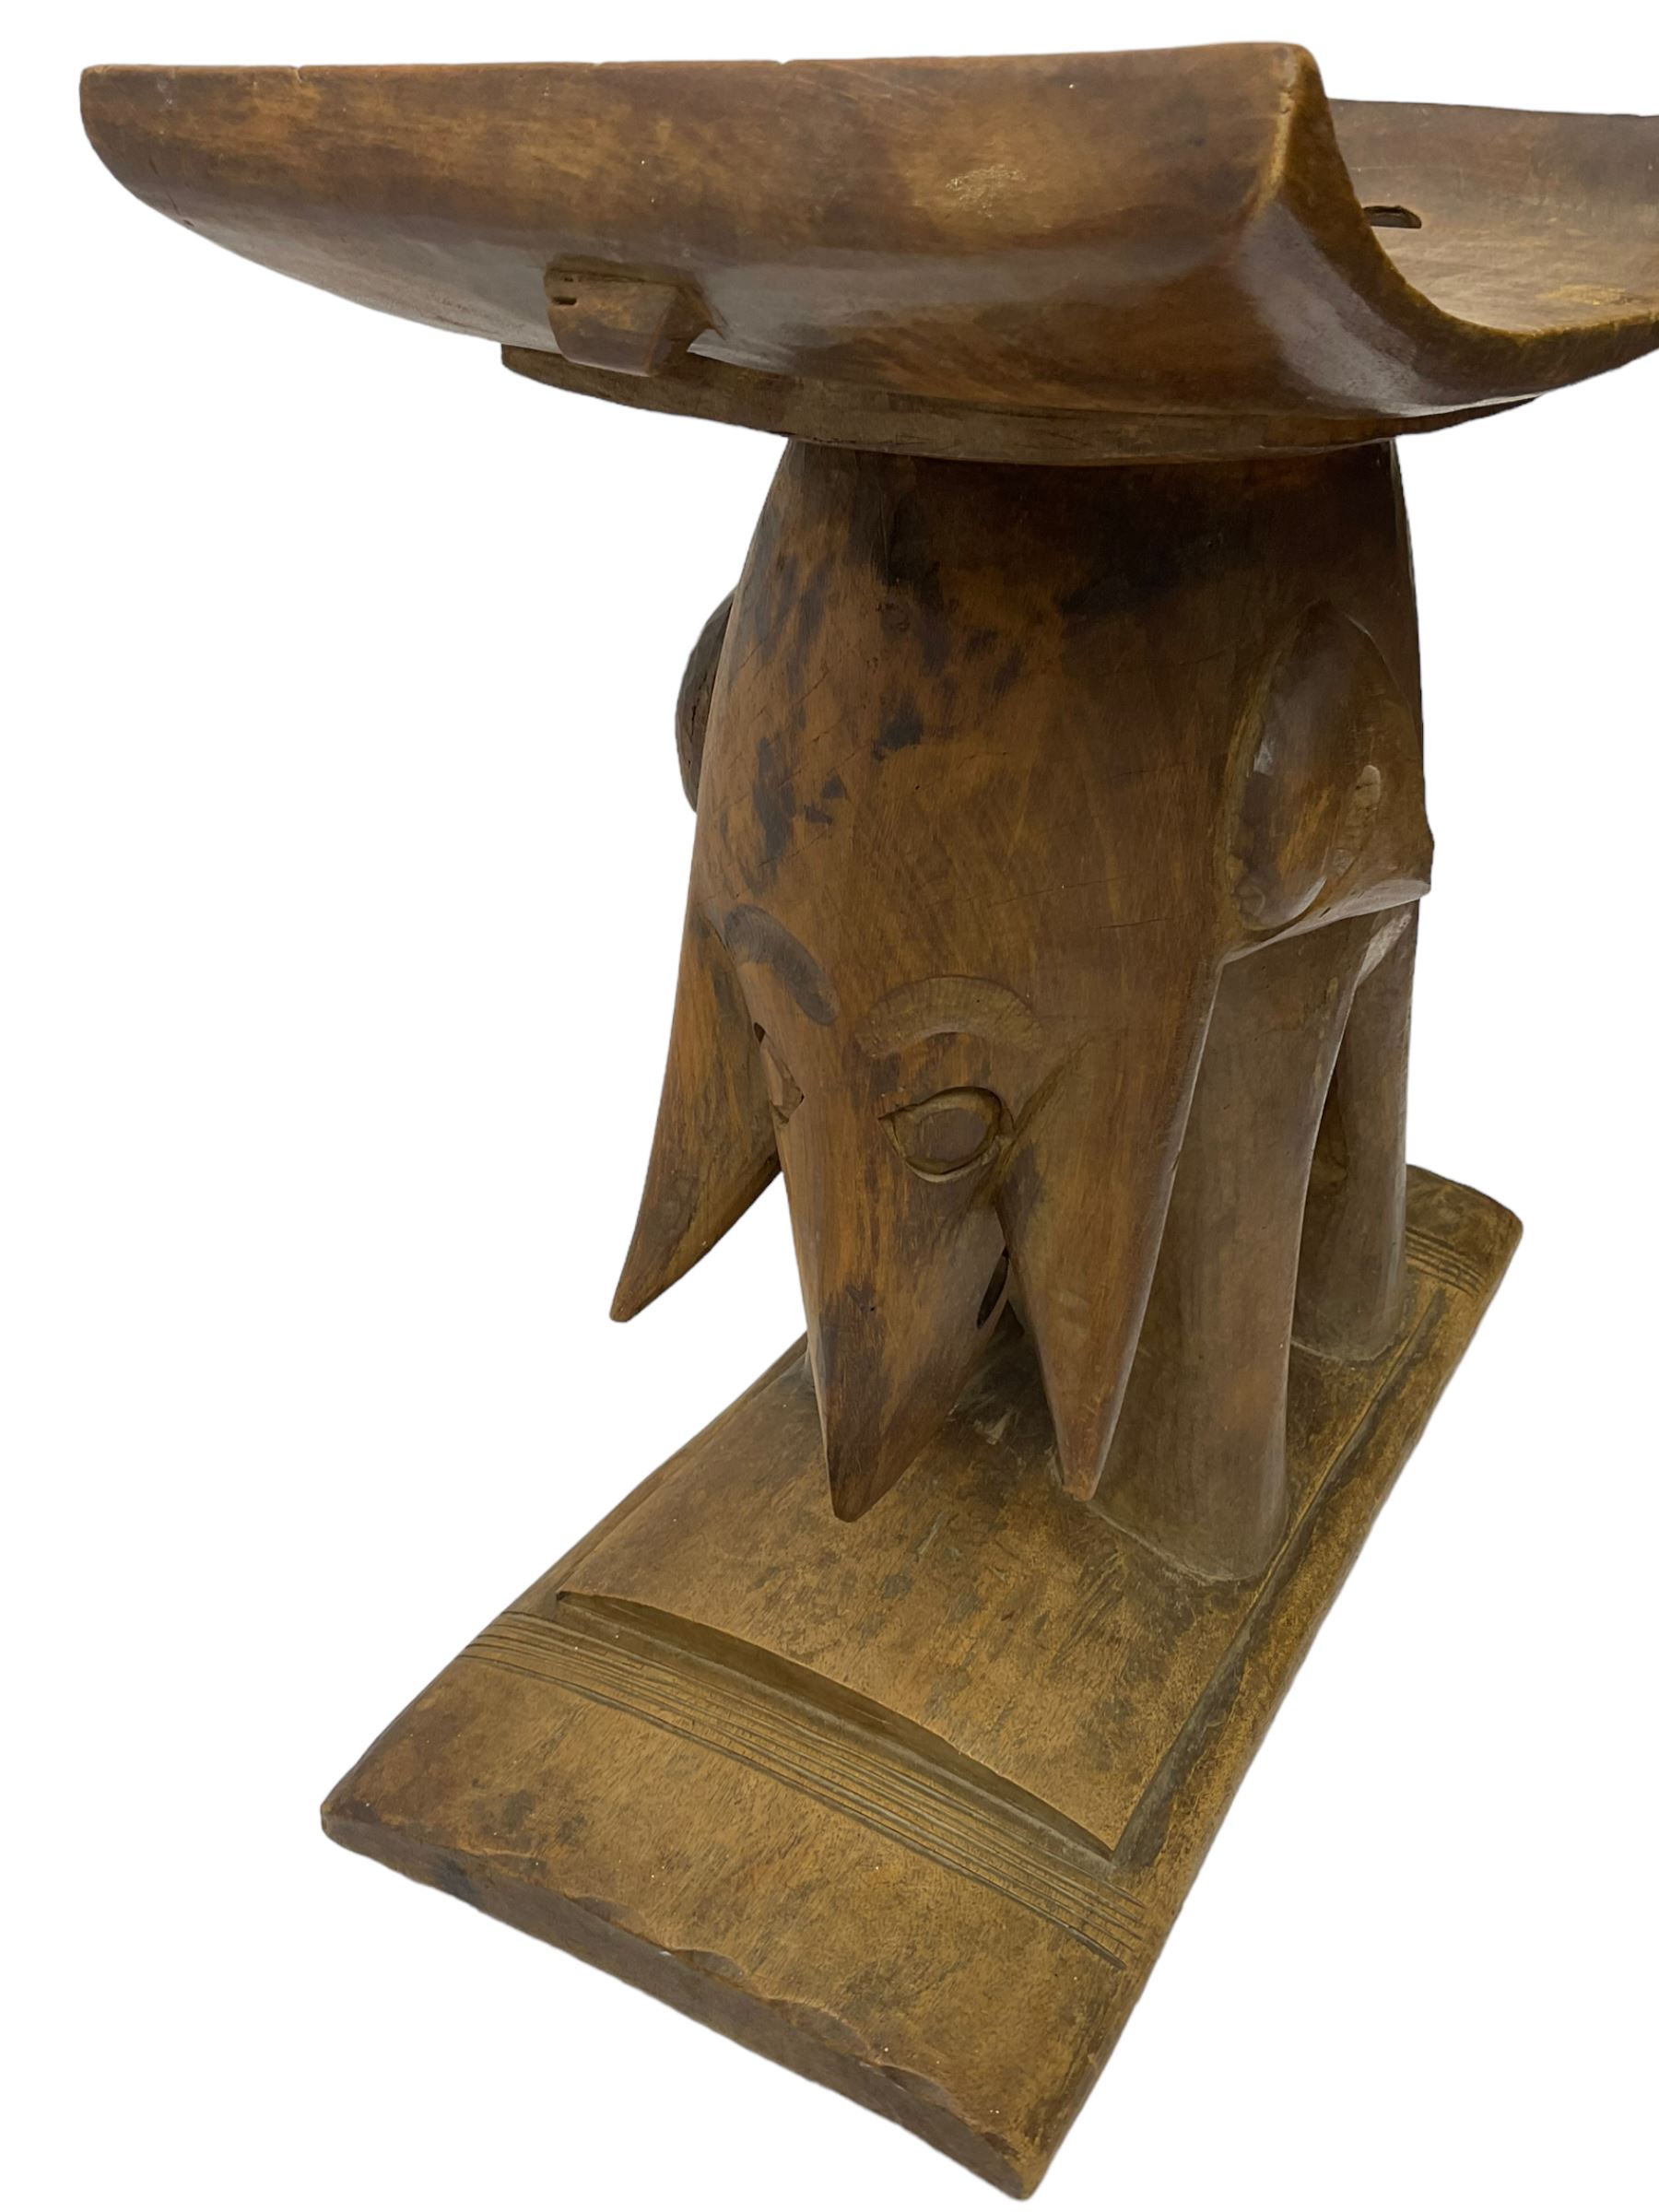 20th century African Ashanti hardwood stool - Image 3 of 10